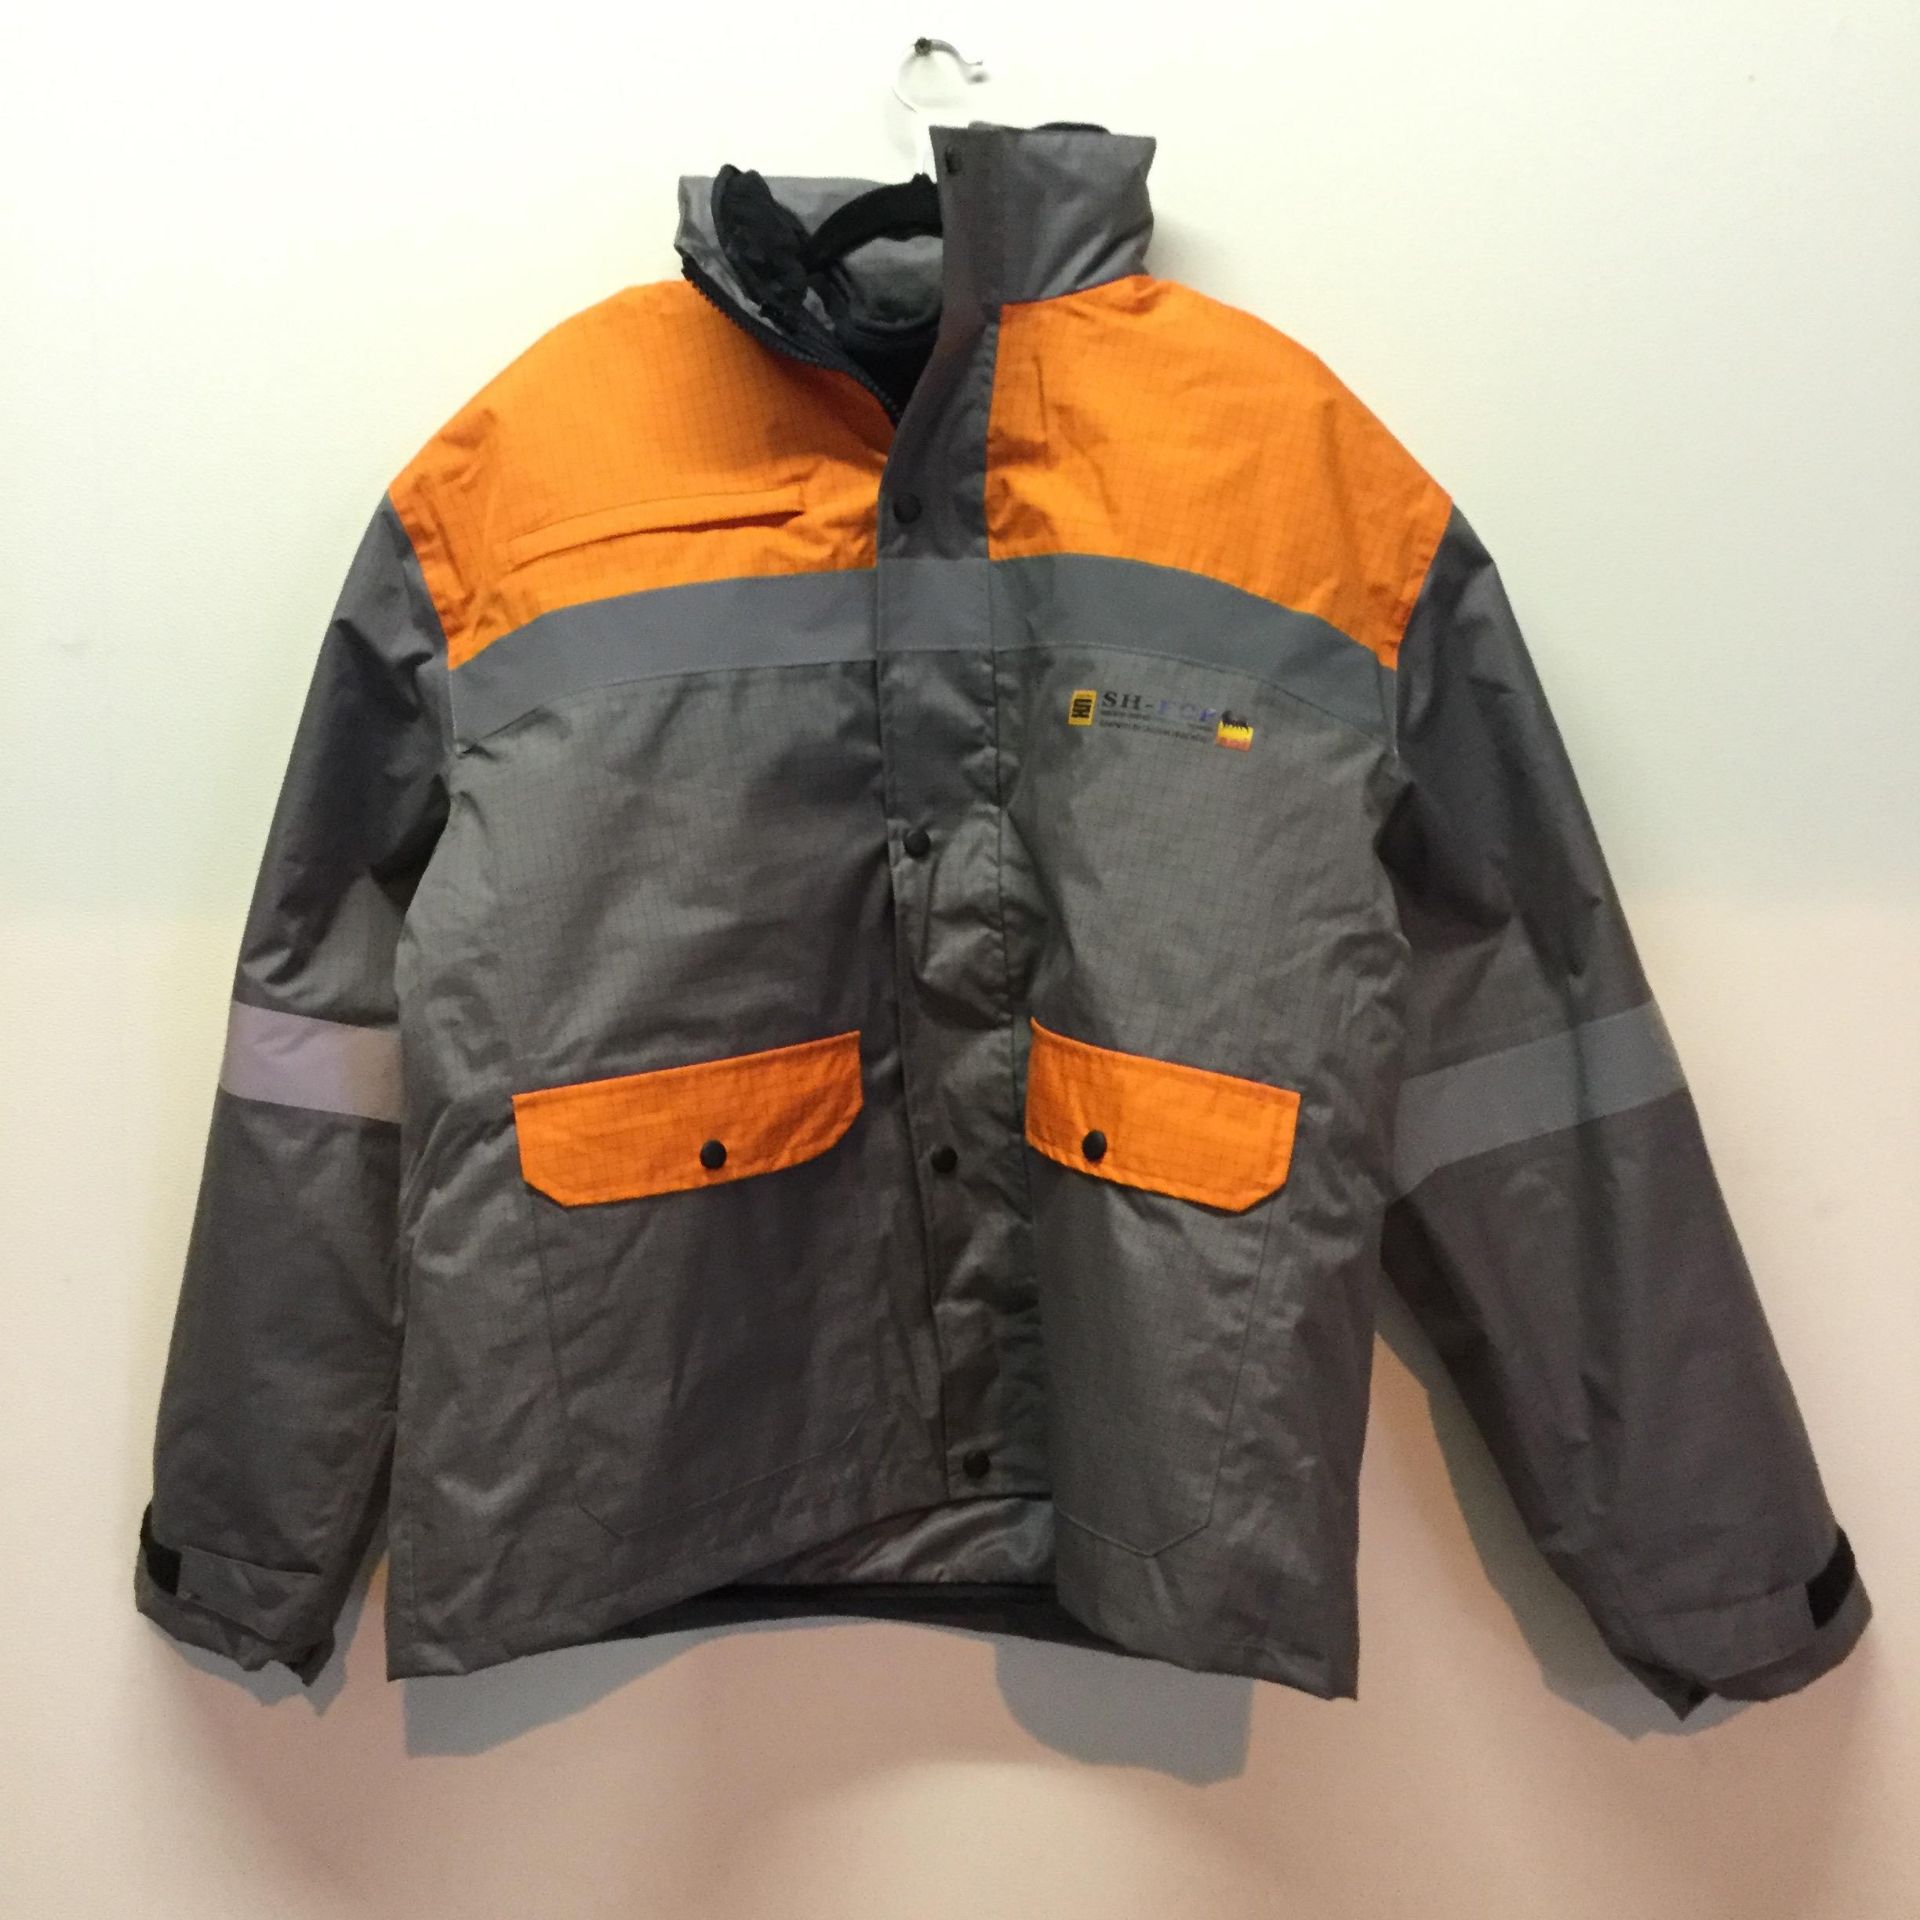 All Weather 3 layer Gortex Antistatic waterproof jacket - Size 48